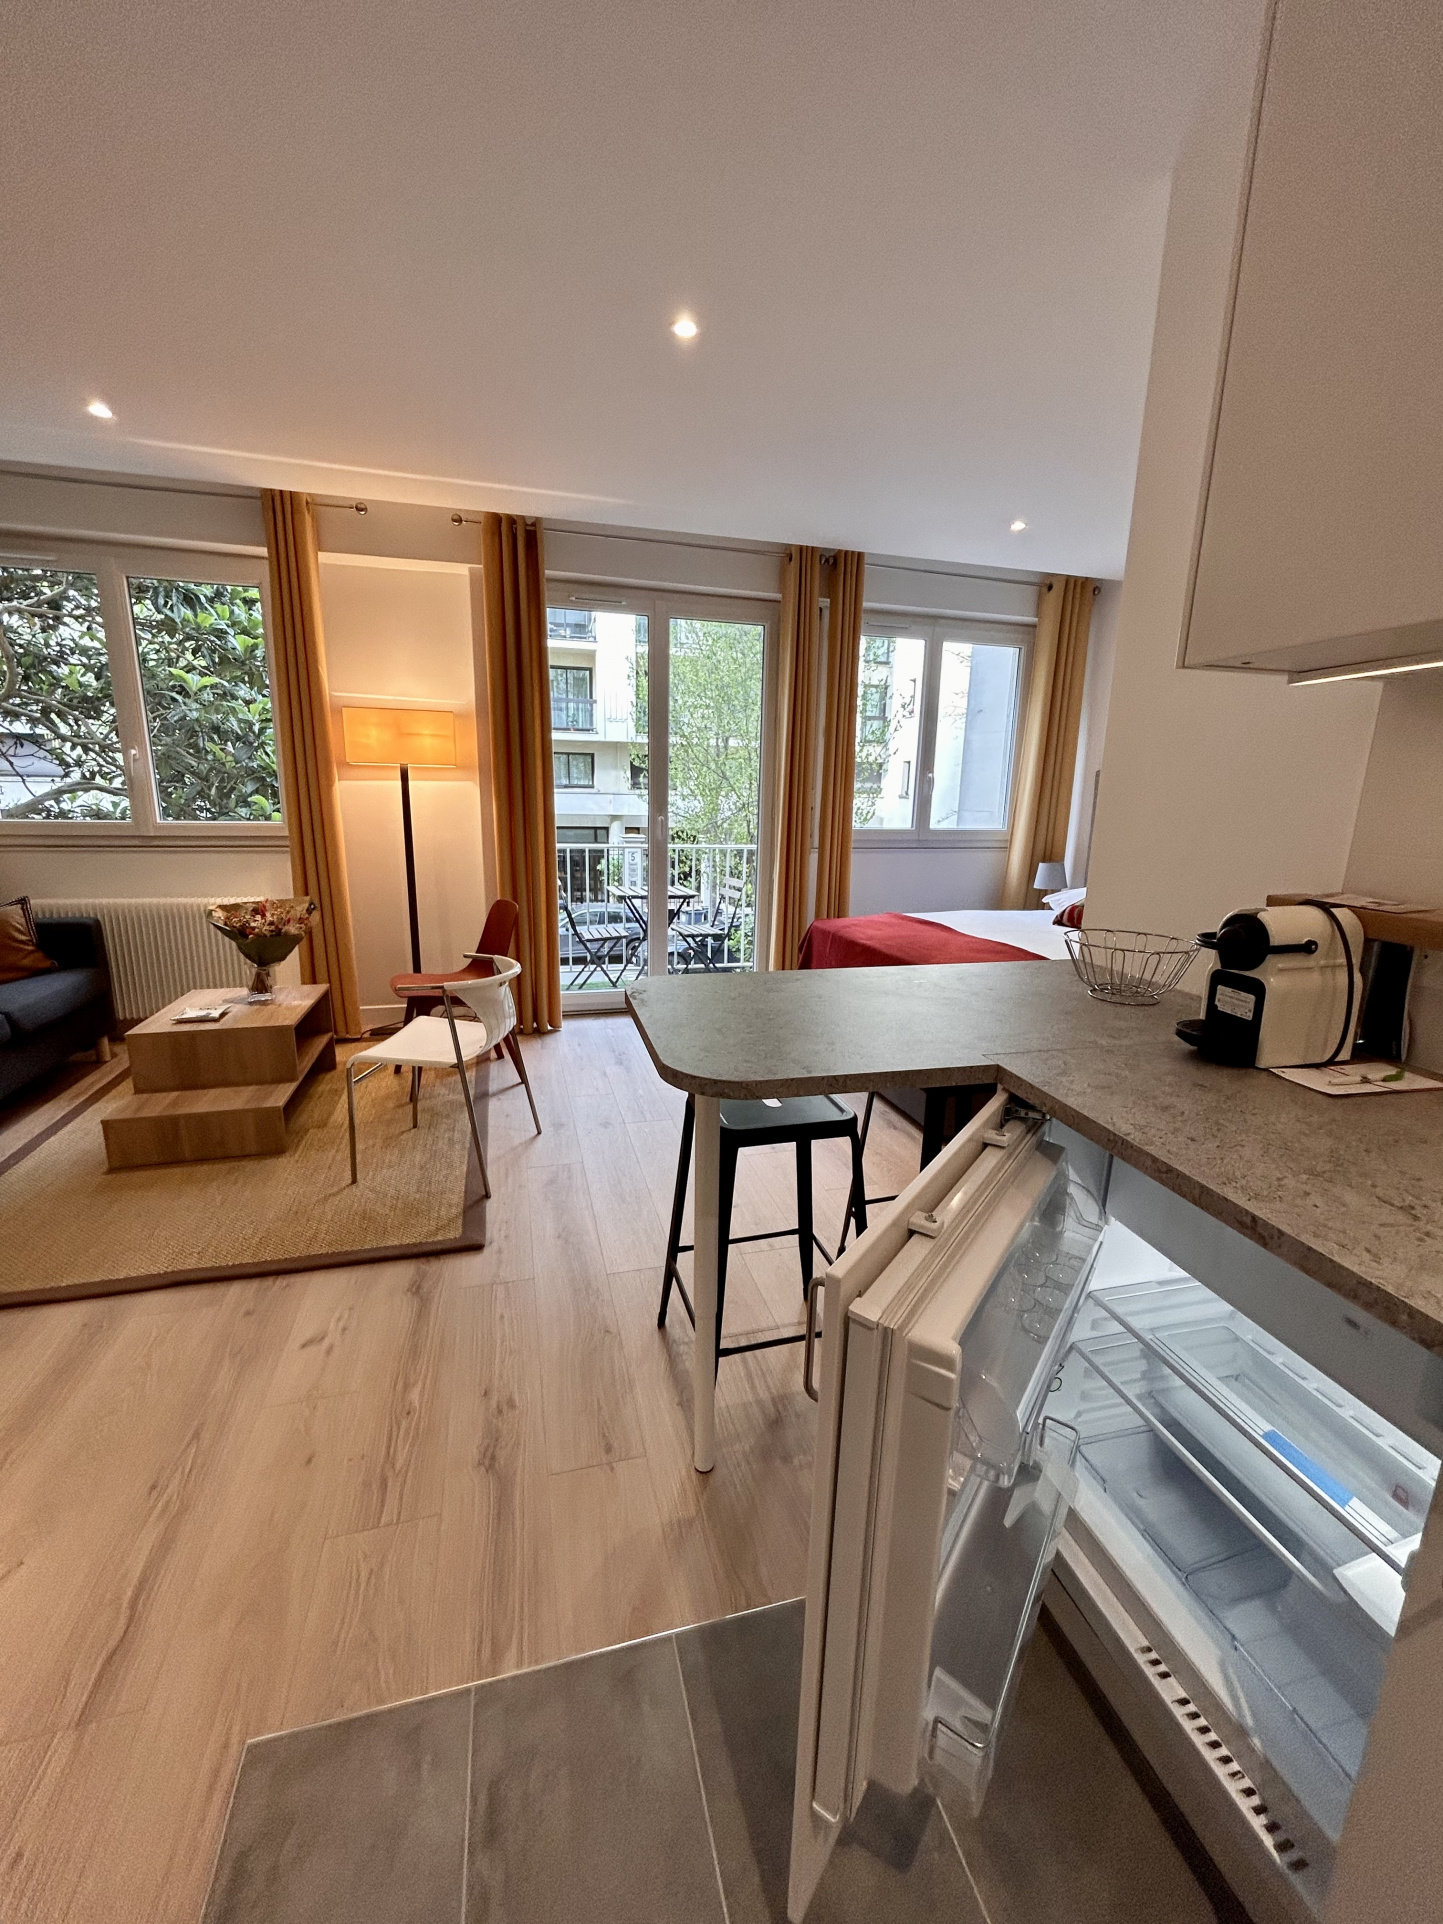 Appartement a louer neuilly-sur-seine - 1 pièce(s) - 29 m2 - Surfyn